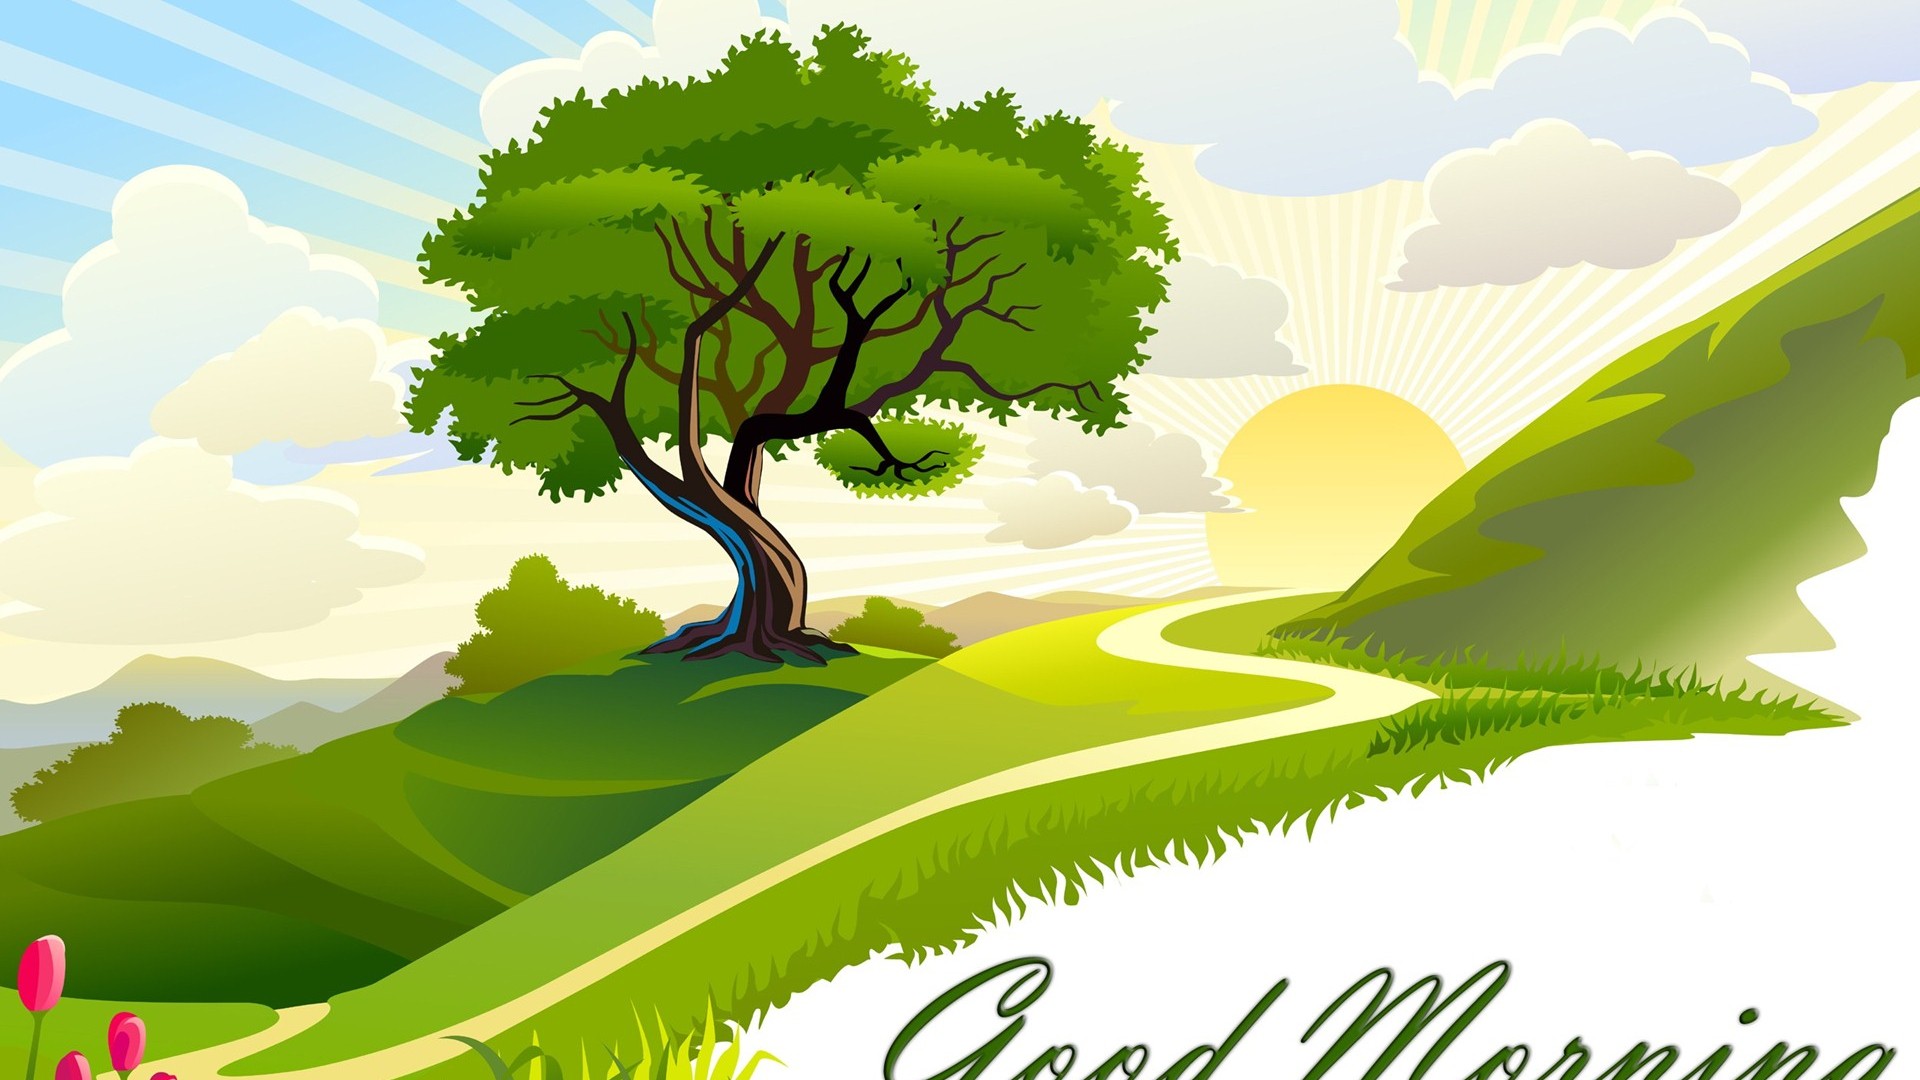 morning wallpaper,natural landscape,nature,green,tree,arbor day